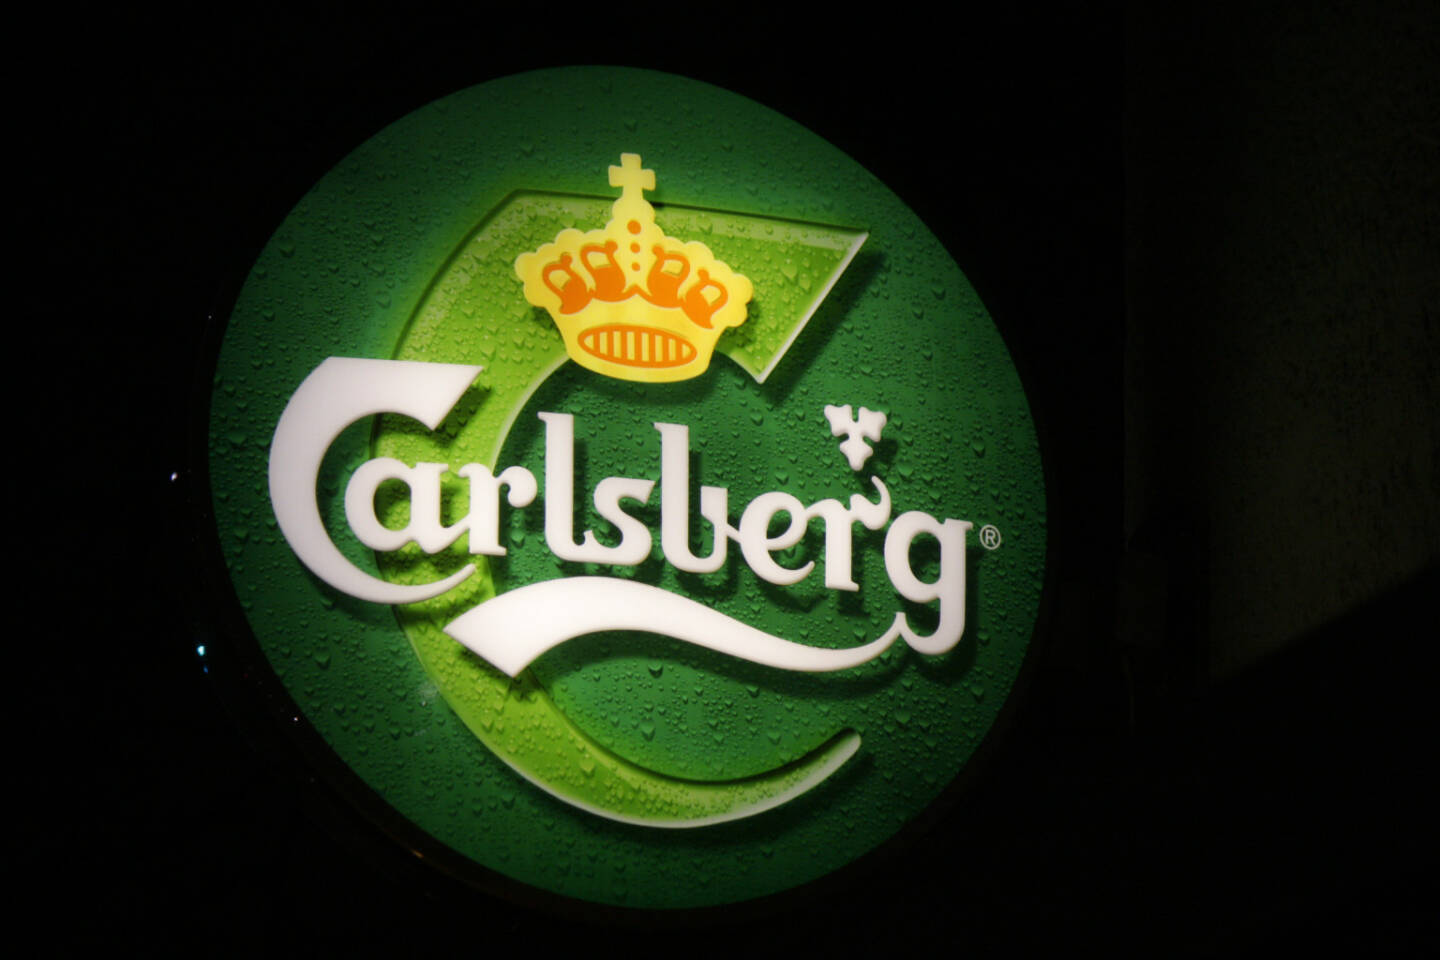 Carlsberg, Logo <a href=http://www.shutterstock.com/gallery-320989p1.html?cr=00&pl=edit-00>360b</a> / <a href=http://www.shutterstock.com/editorial?cr=00&pl=edit-00>Shutterstock.com</a>